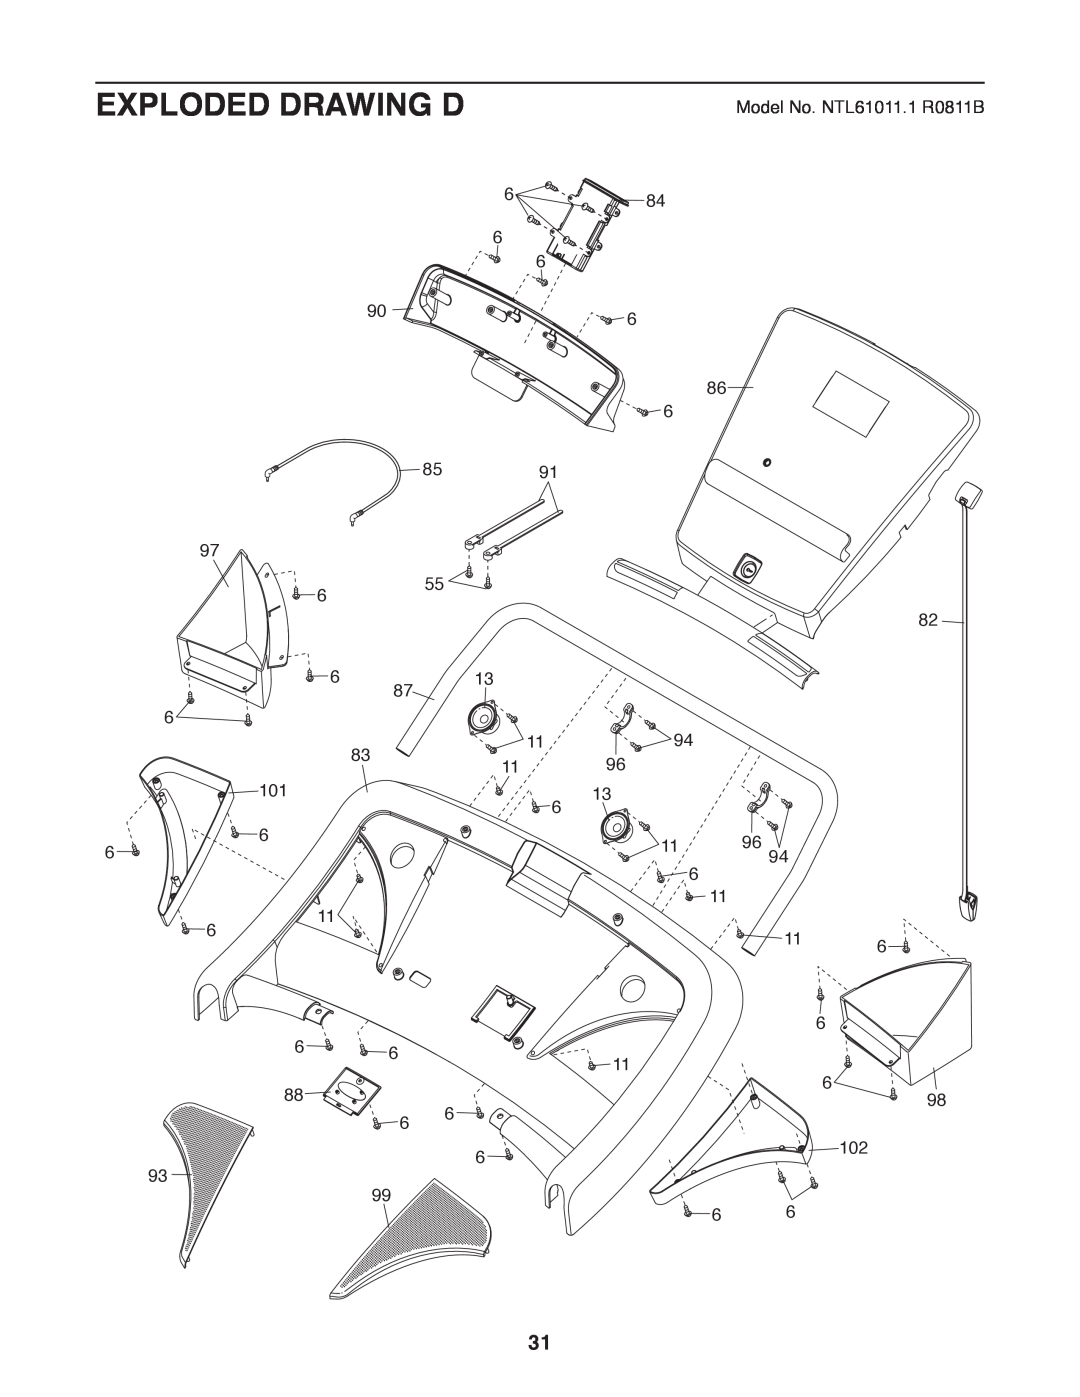 Sears user manual Exploded Drawing D, Model No. NTL61011.1 R0811B 